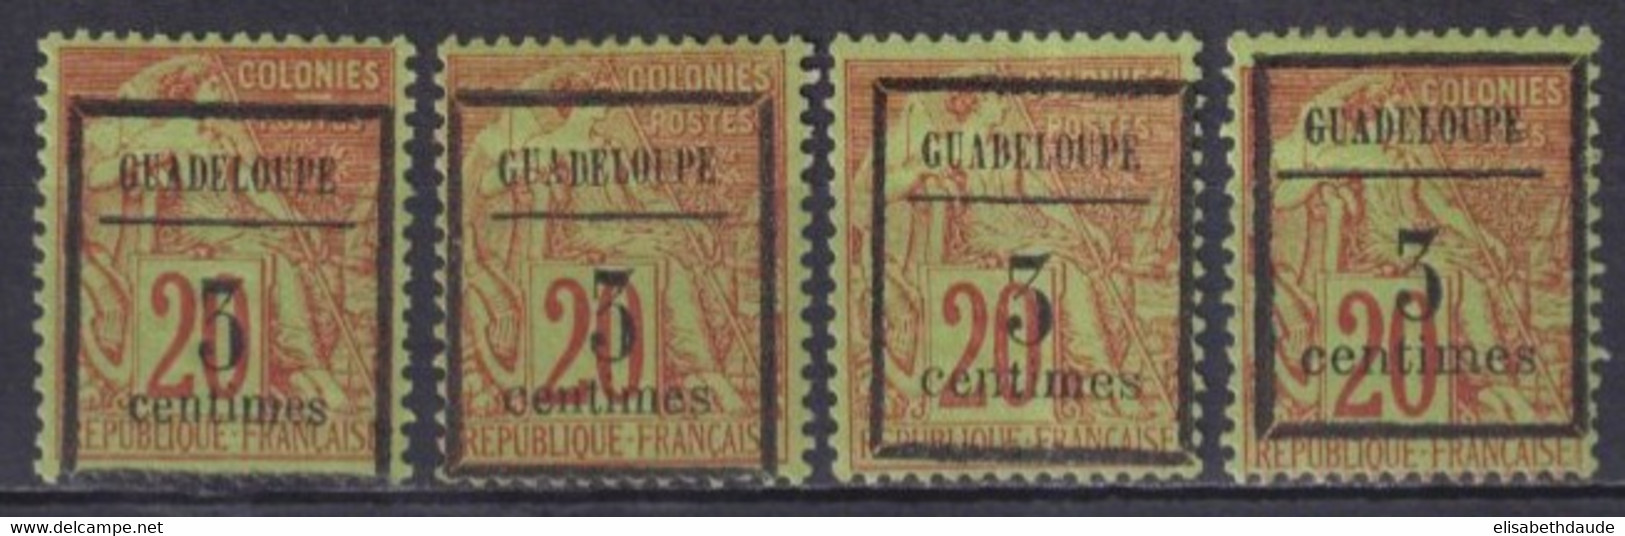 GUADELOUPE - 1889 - YVERT N° 3 TYPES I+II+III+V  * MH - COTE = 81 EUR. - - Nuevos